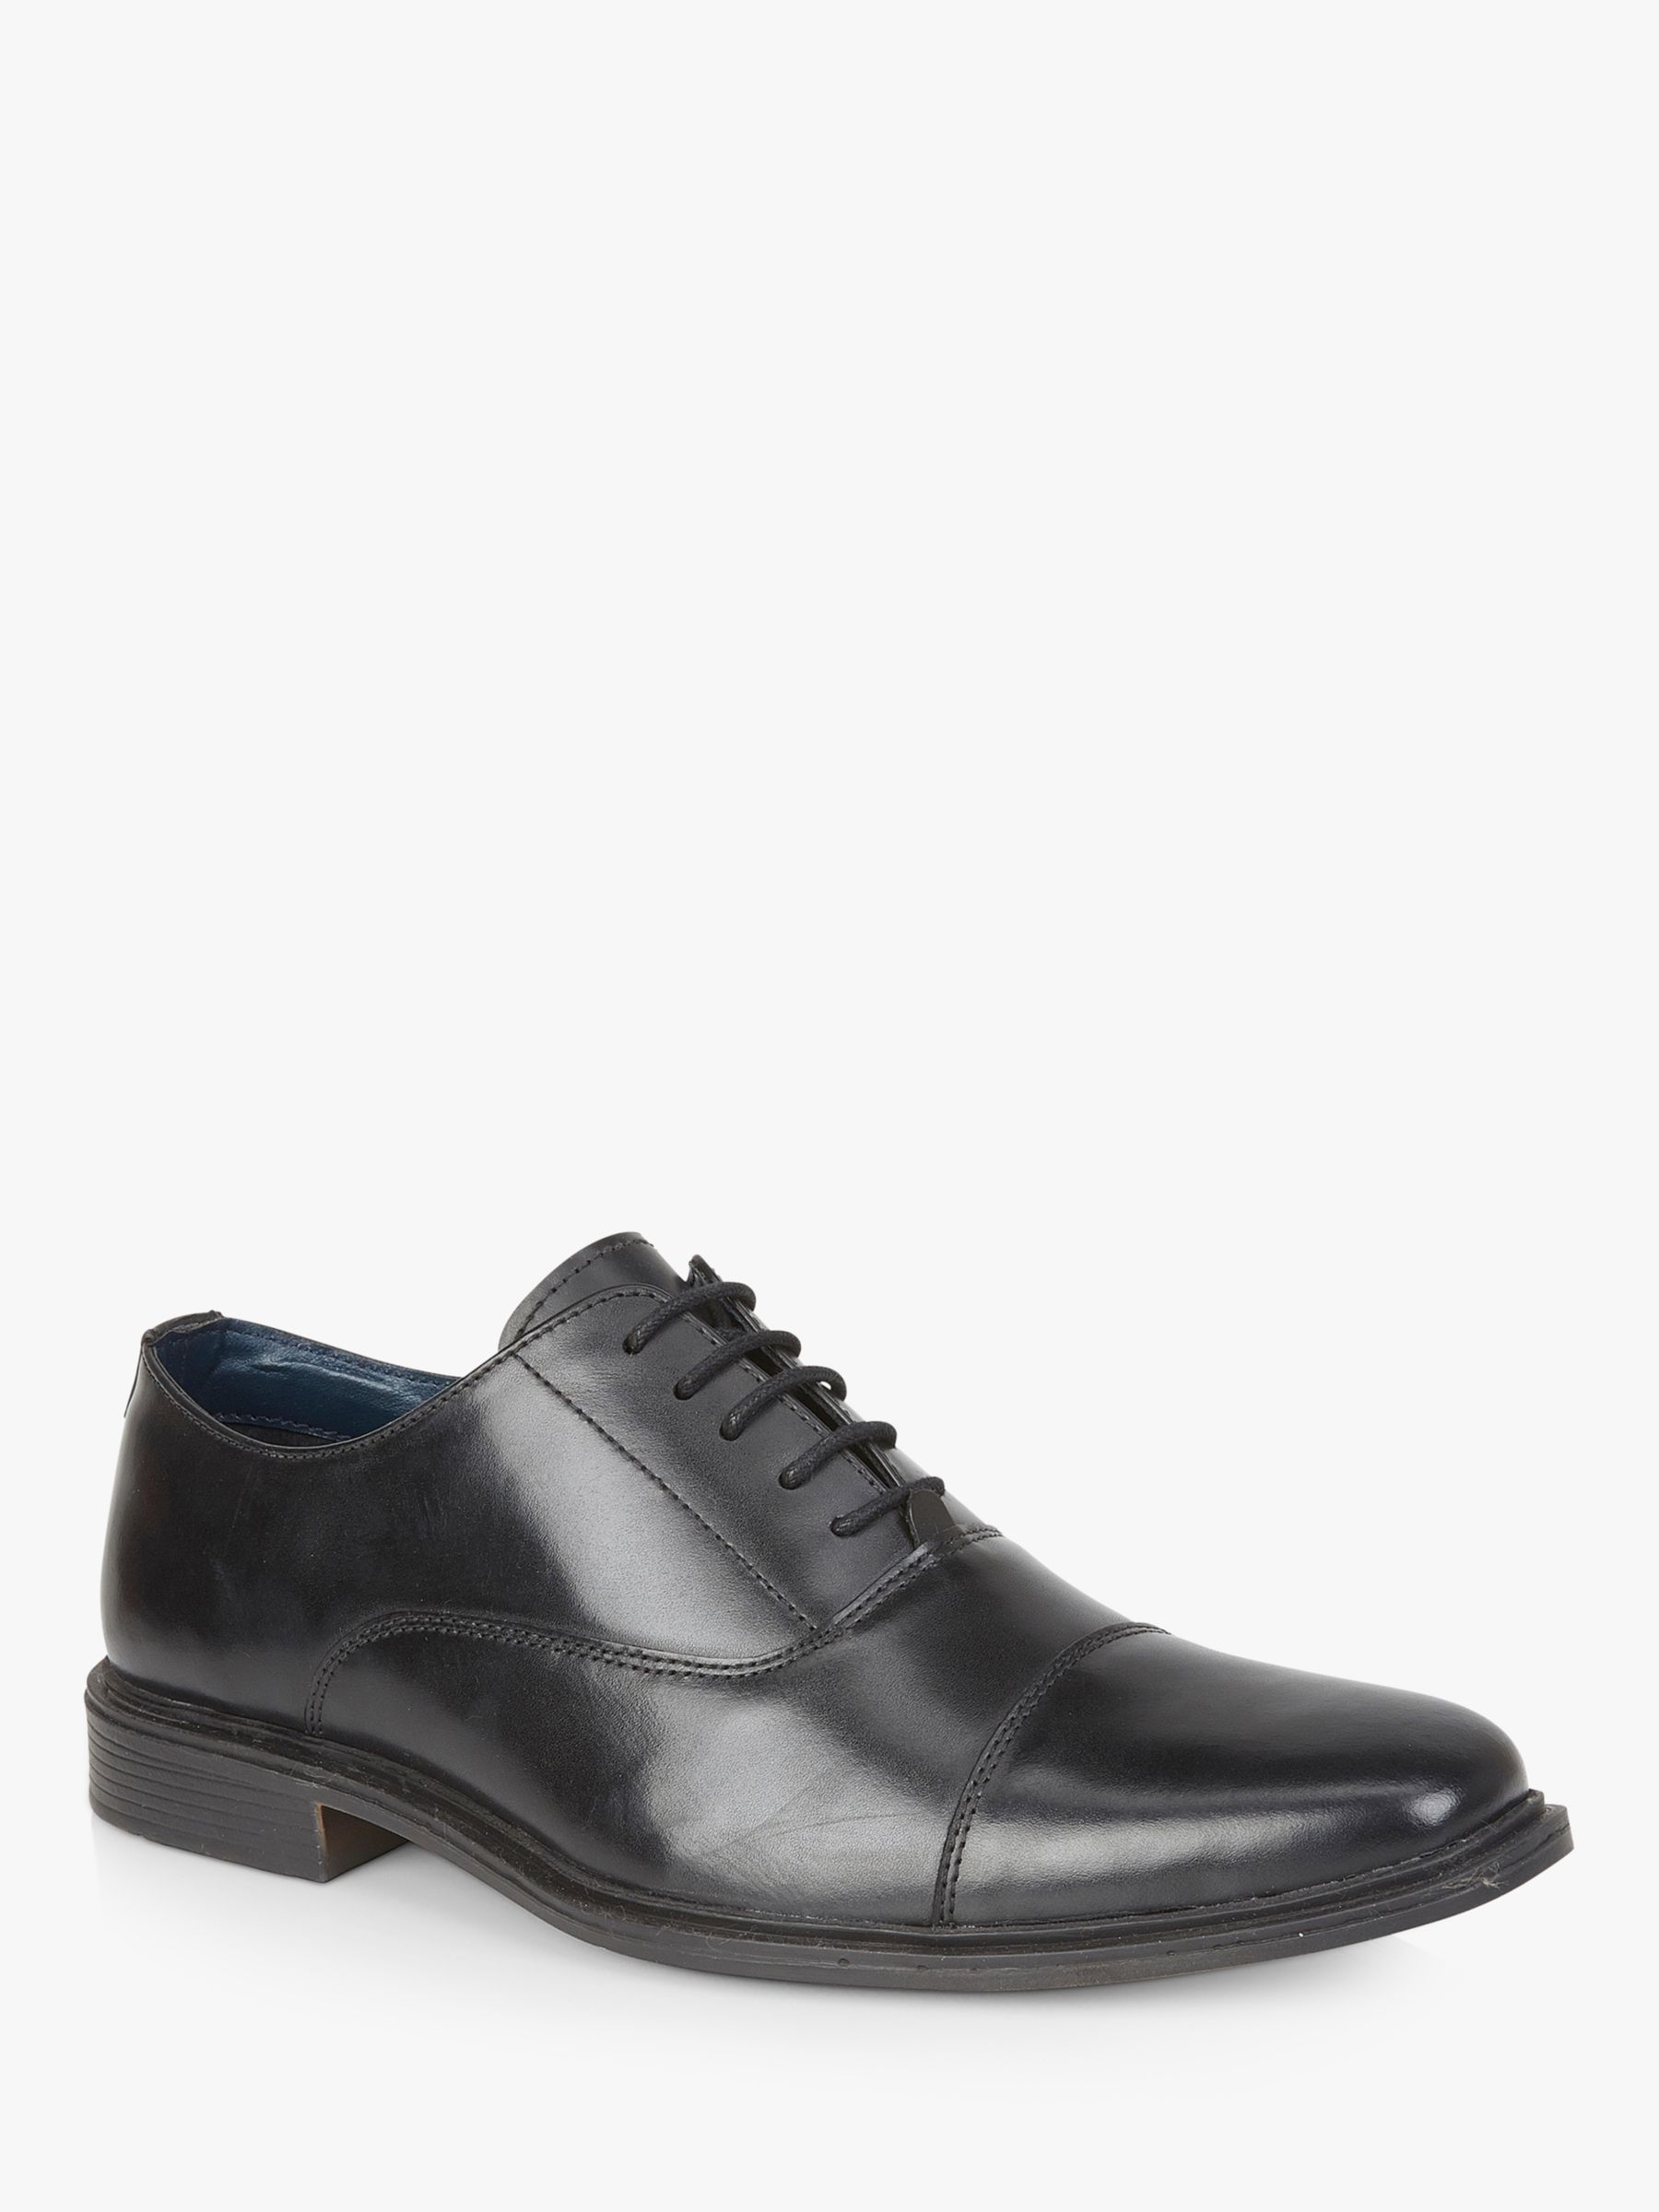 Silver Street London Burford Formal Derby Shoes, Black at John Lewis ...